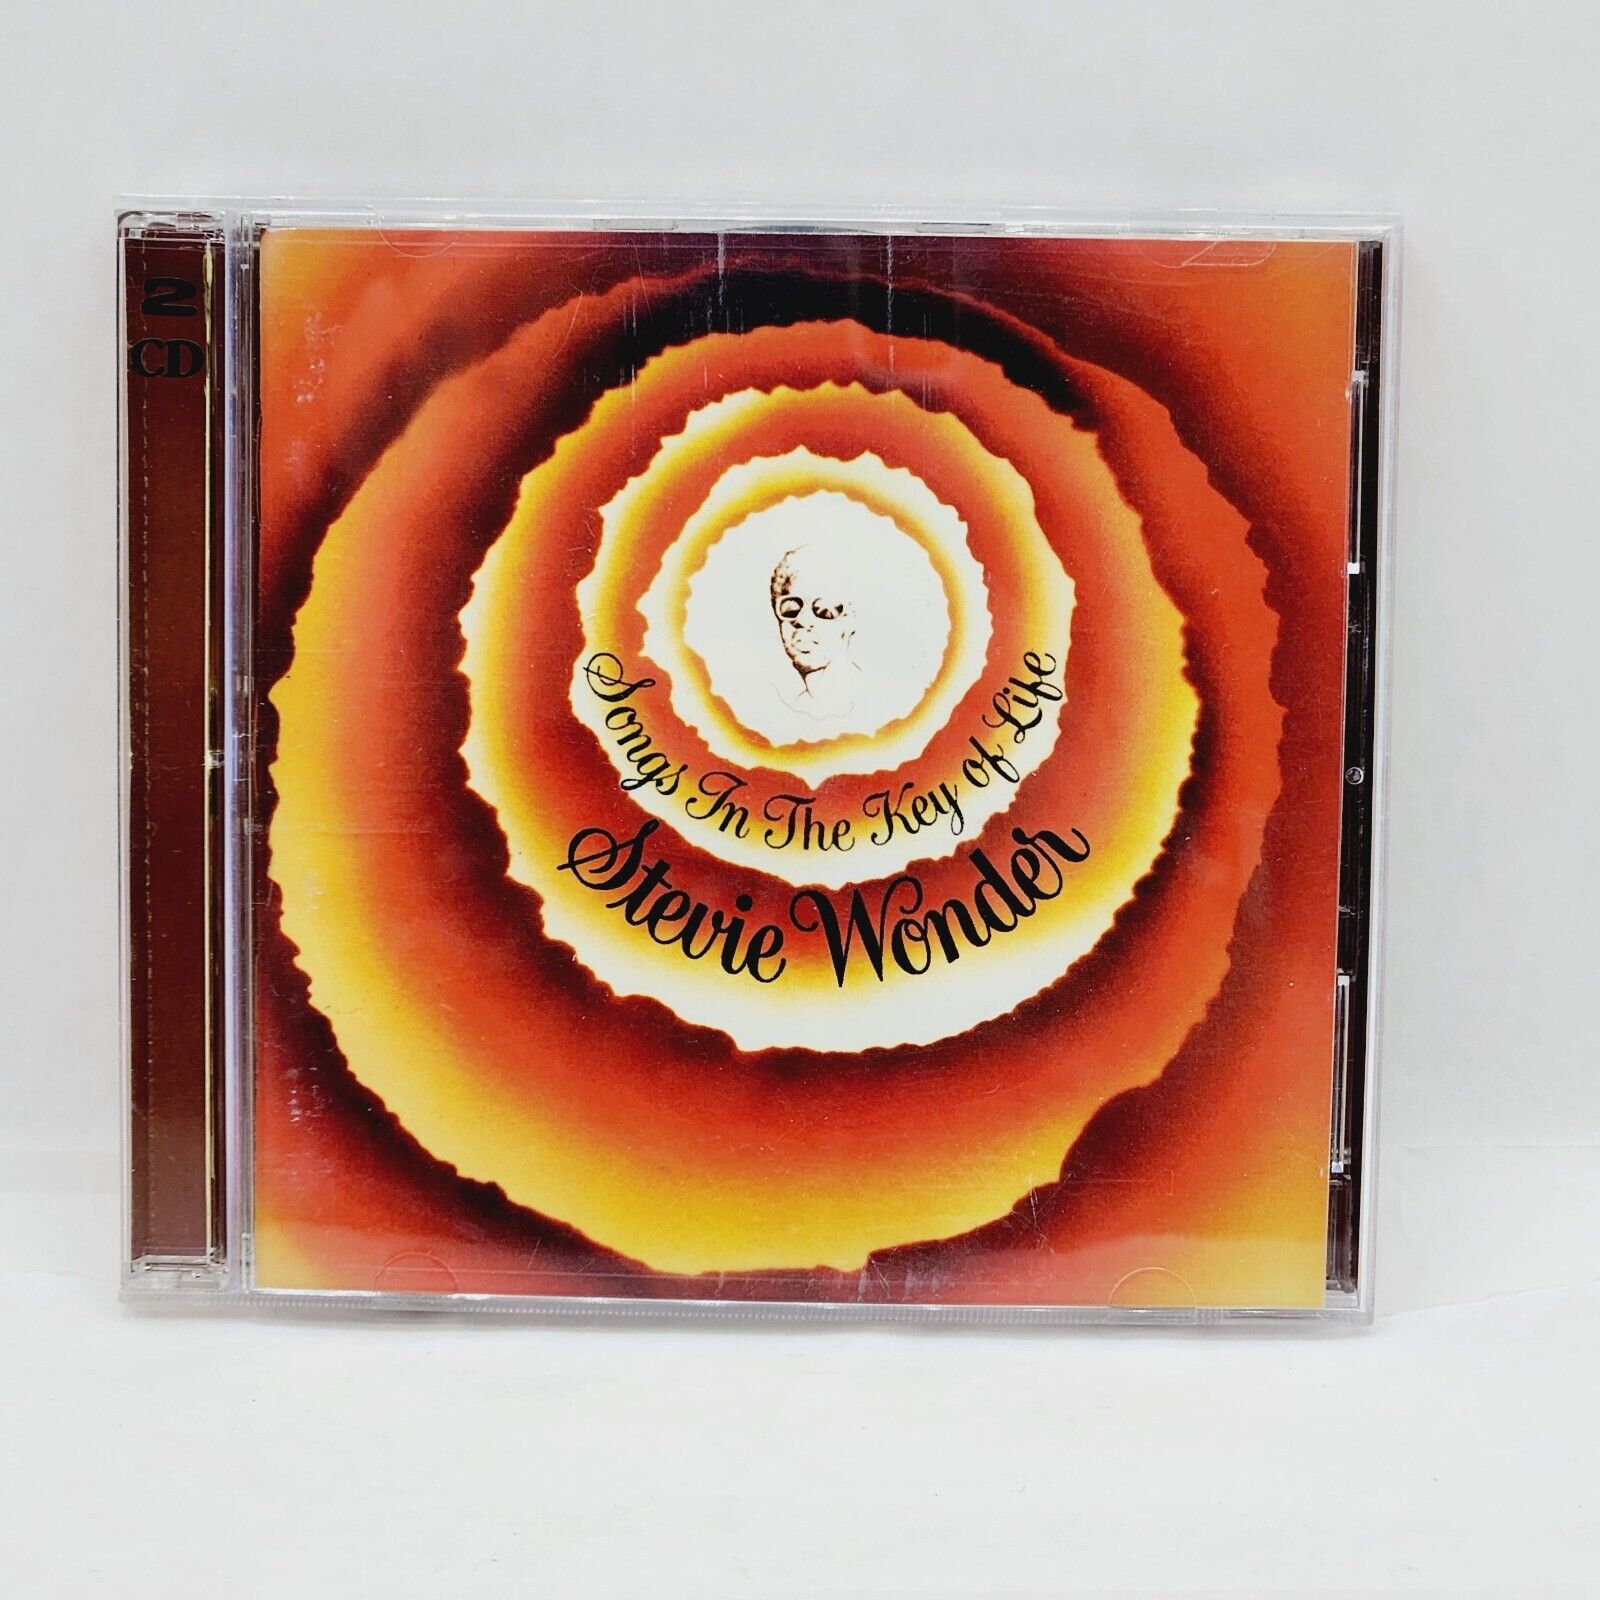 Stevie Wonder Songs In The Key Of Life Stevie Wonder CD Music 